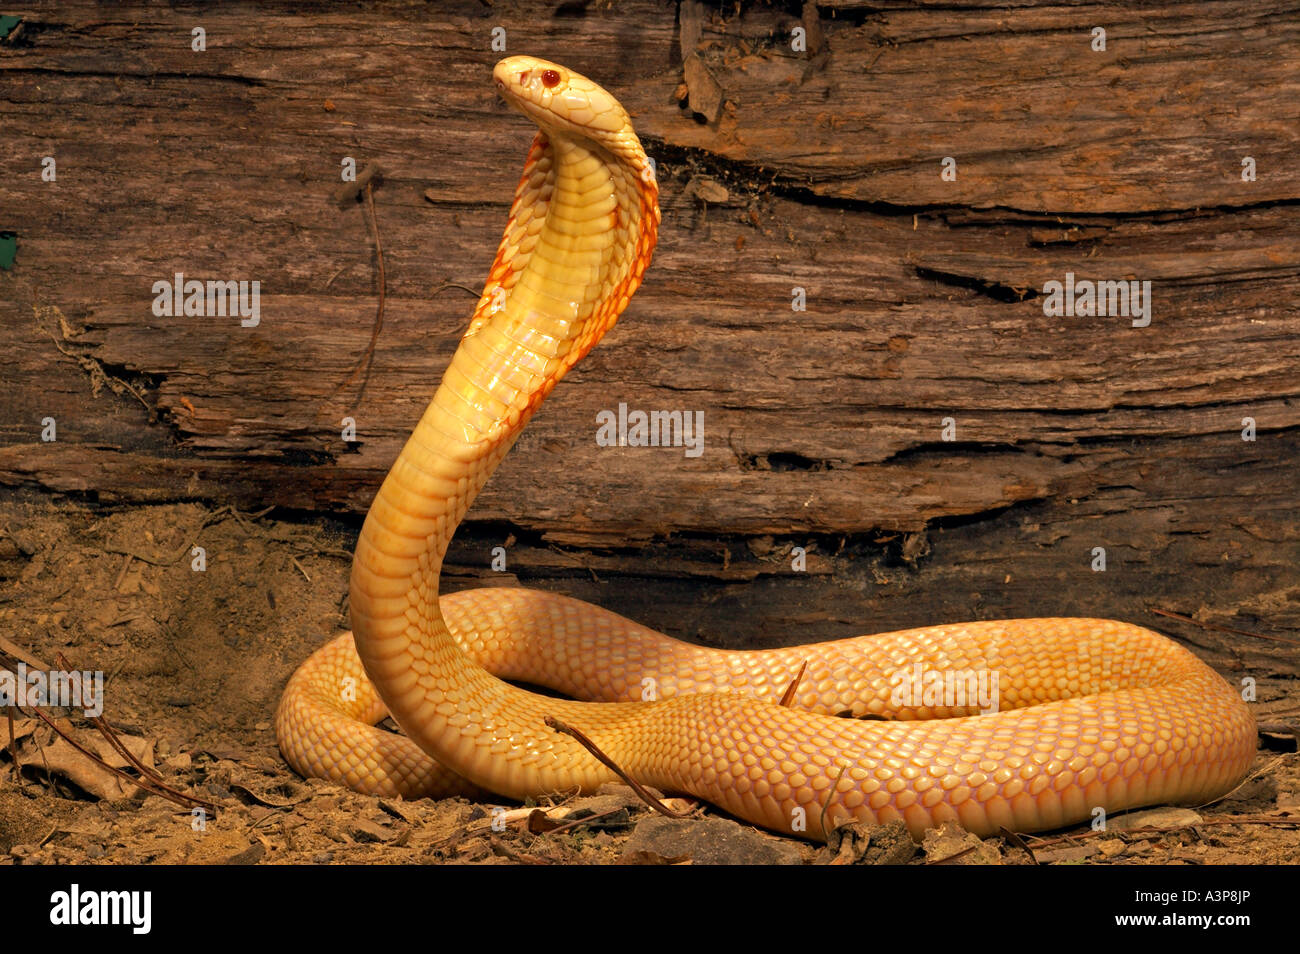 Monocled Cobra Naja naja kaouthis albino rearing Thailand Stock Photo